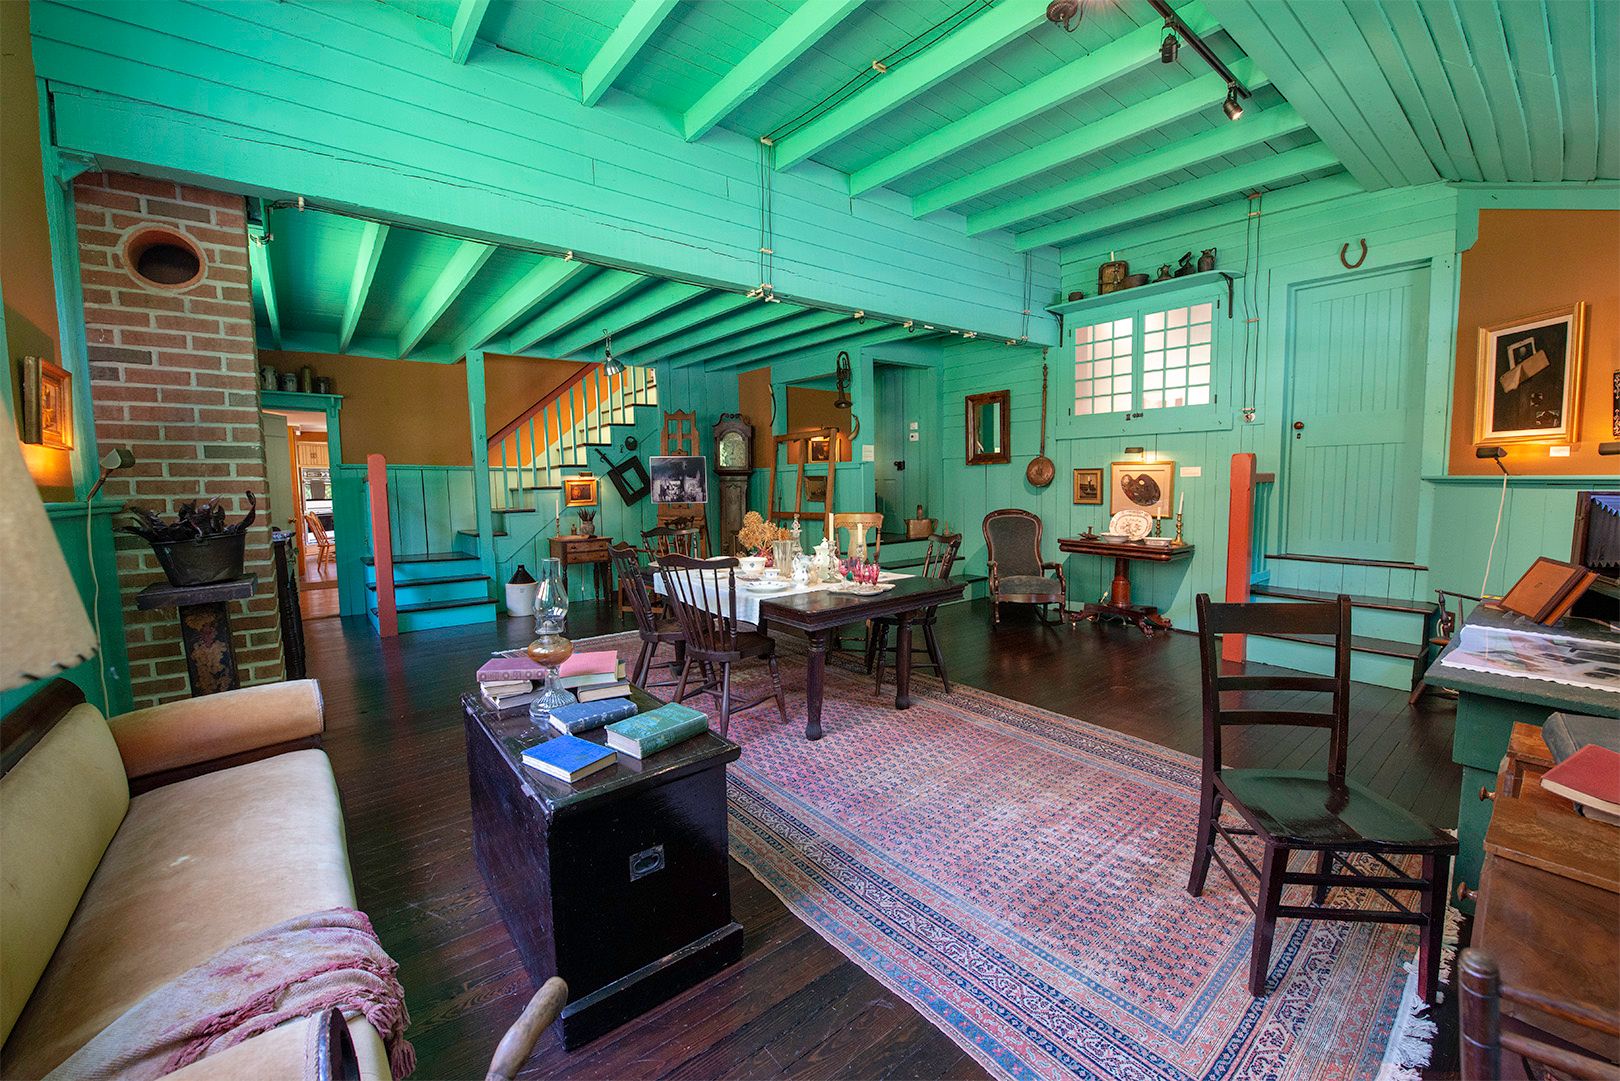 Peto Studio Interior with green walls